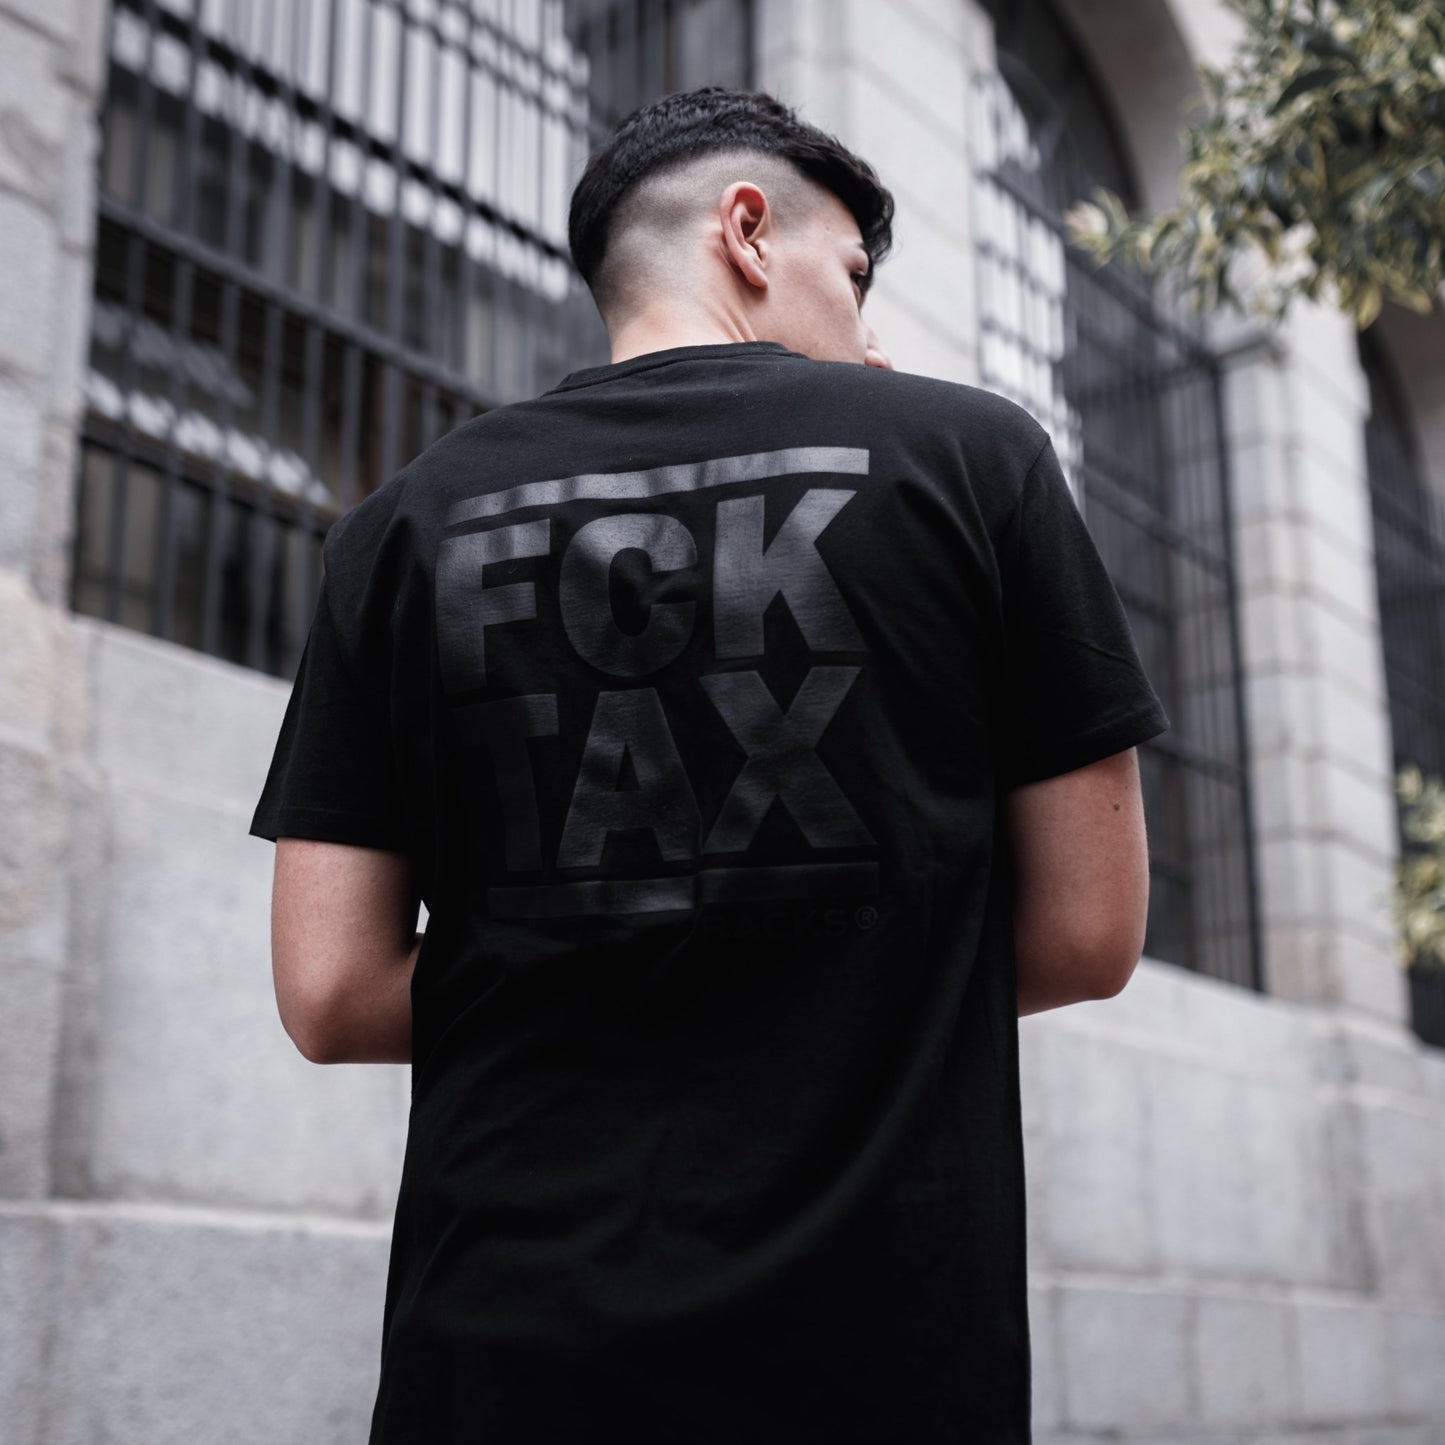 Camiseta Tactical FCK TAX 🏴 - Racksmafia